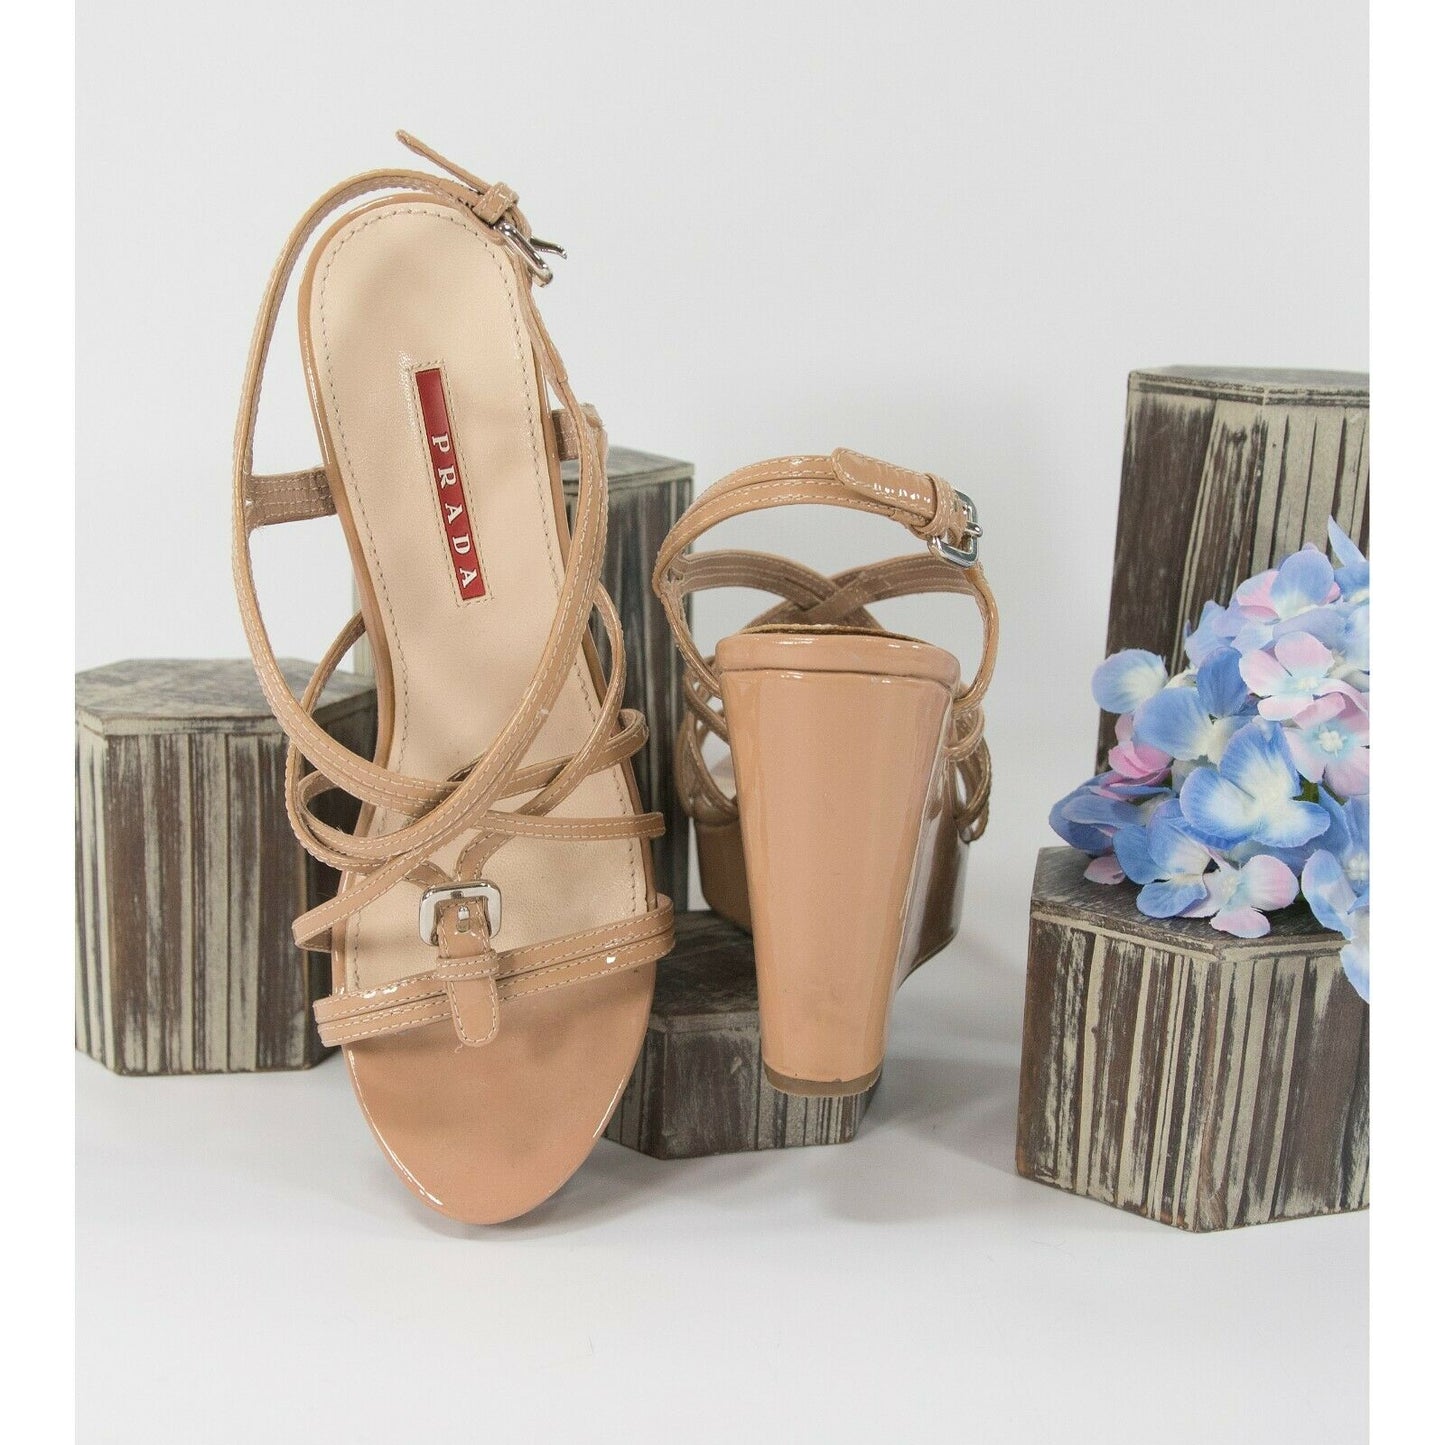 Prada Nude Patent Strappy Wedge Heels Shoes Sz 36.5 6.5